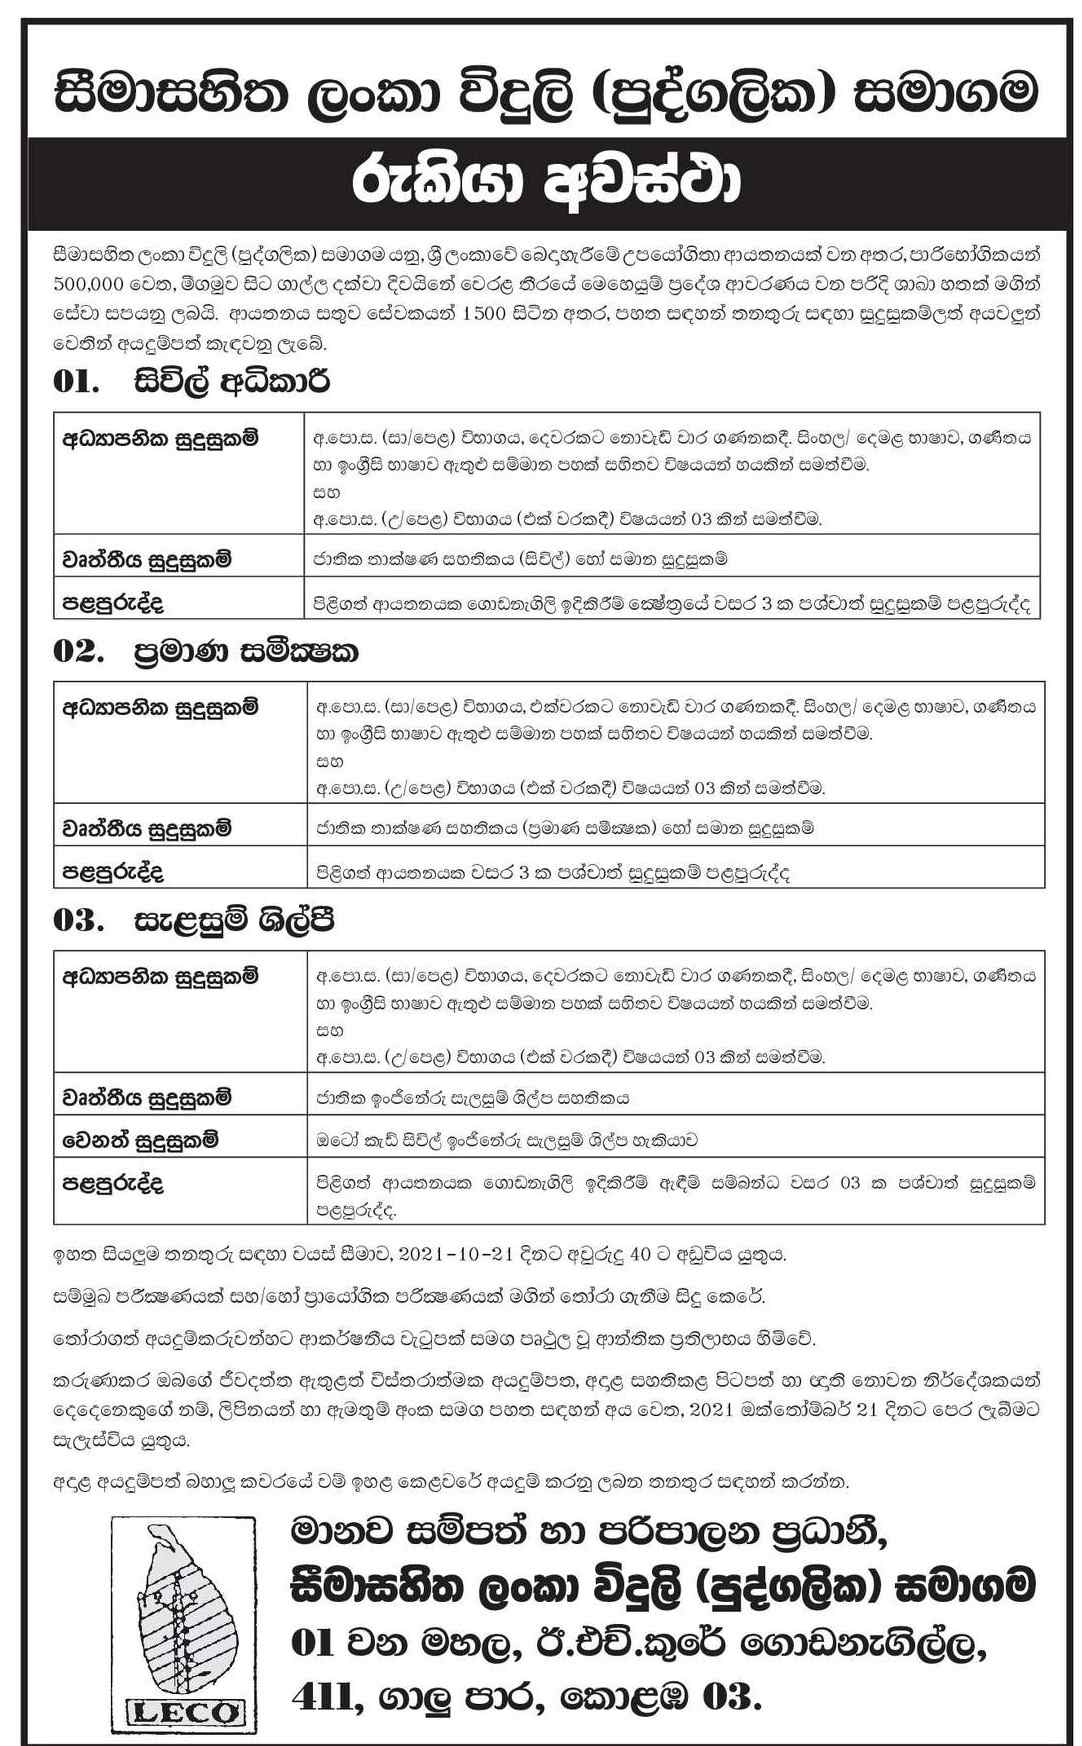 Civil Superintendent, Quantity Supervisor, Draught Person - Lanka Electricity Company (Private) Limited Sinhala